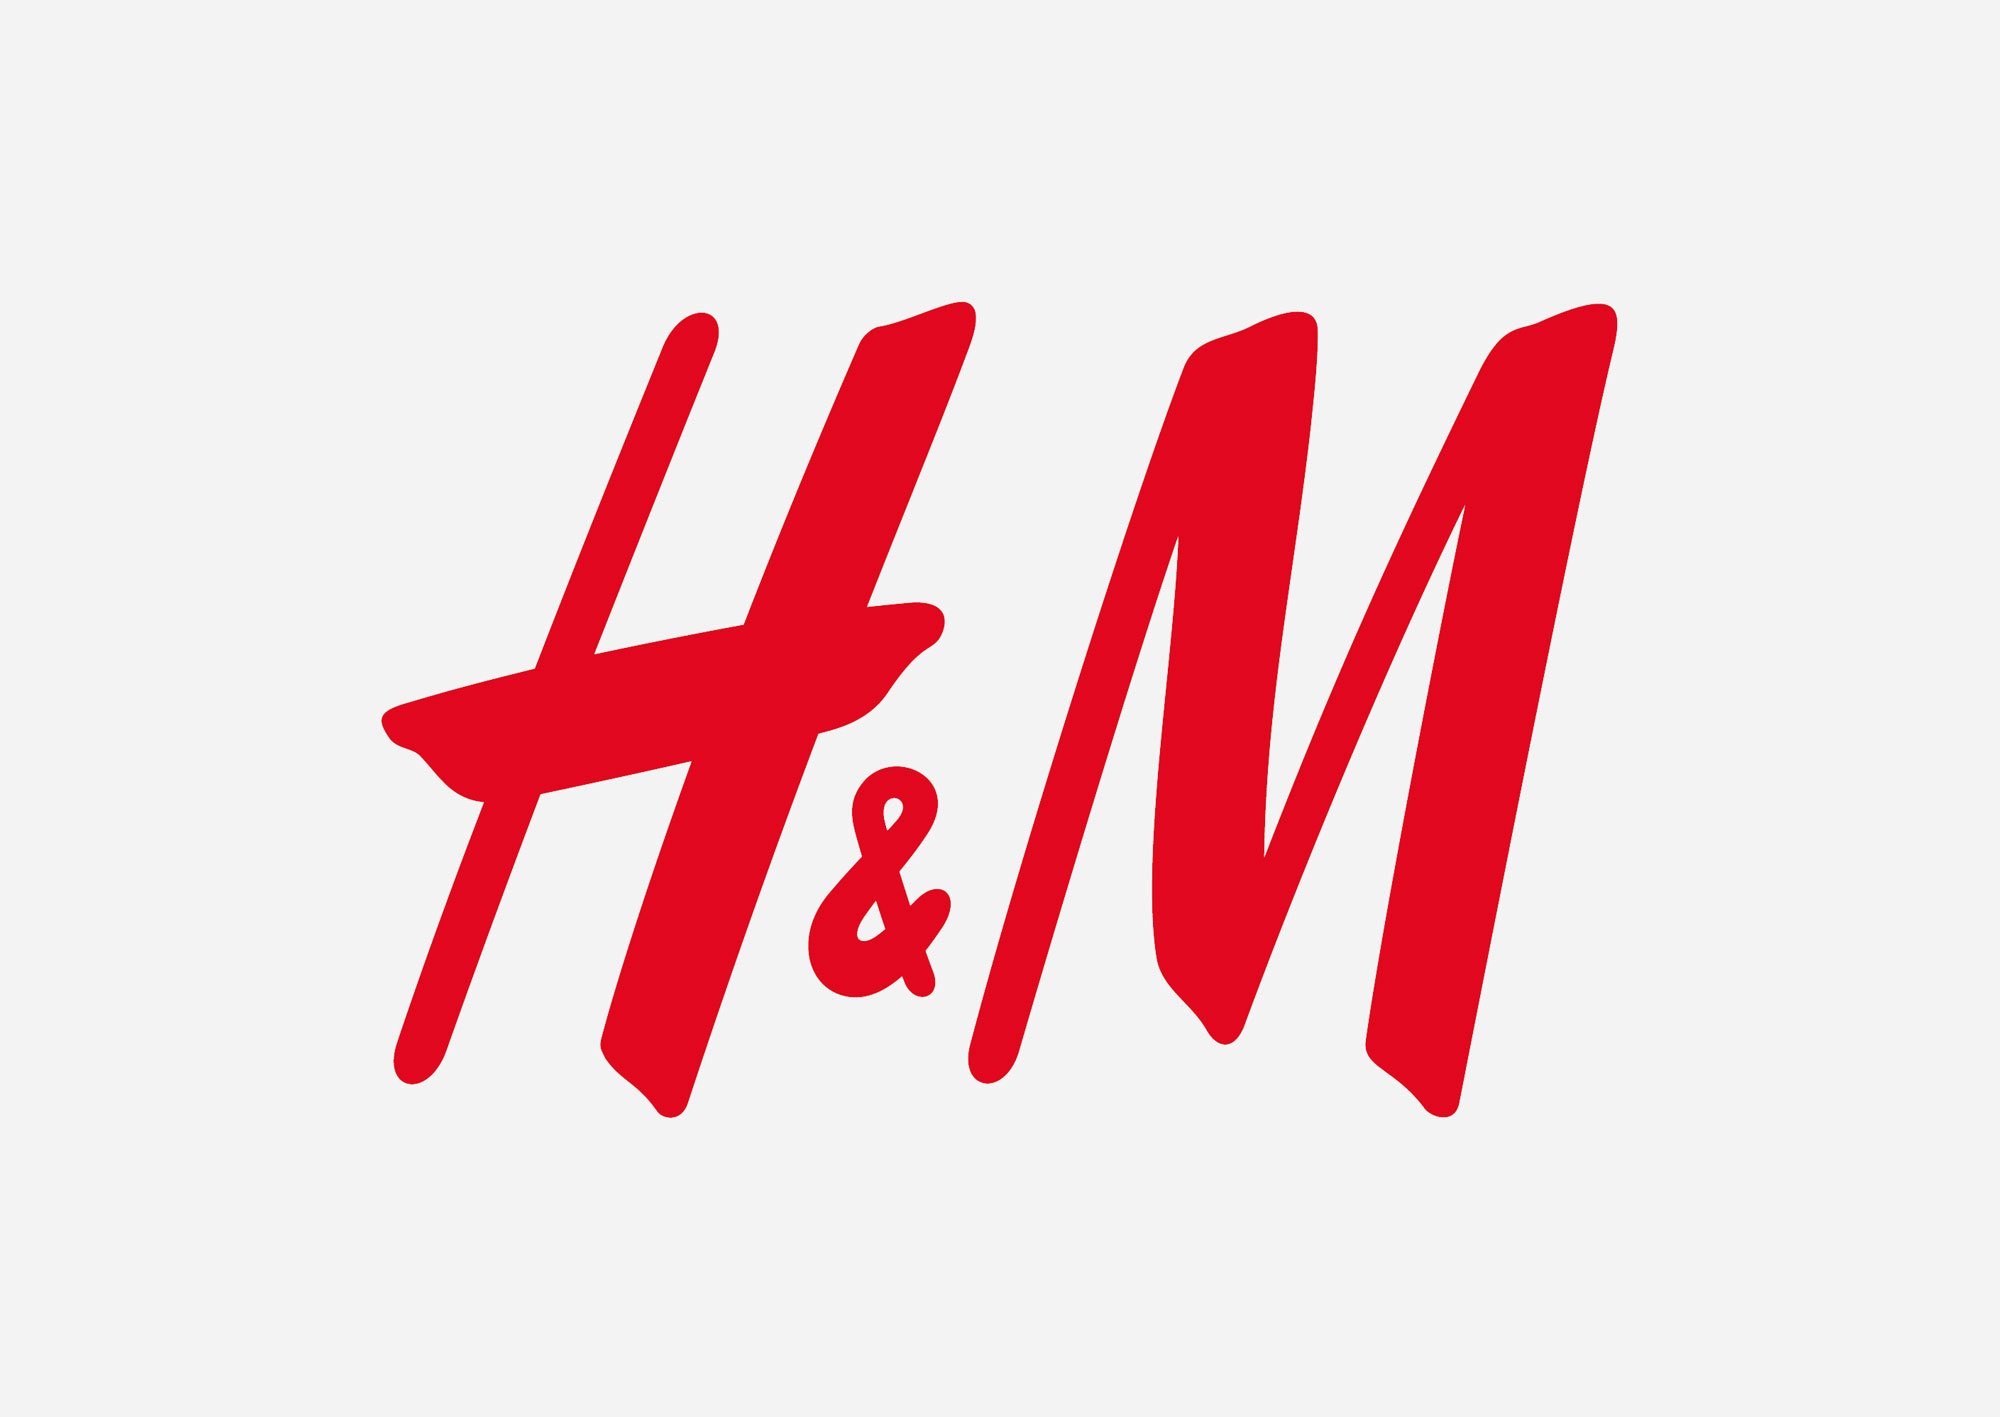 H&M, Stockholm